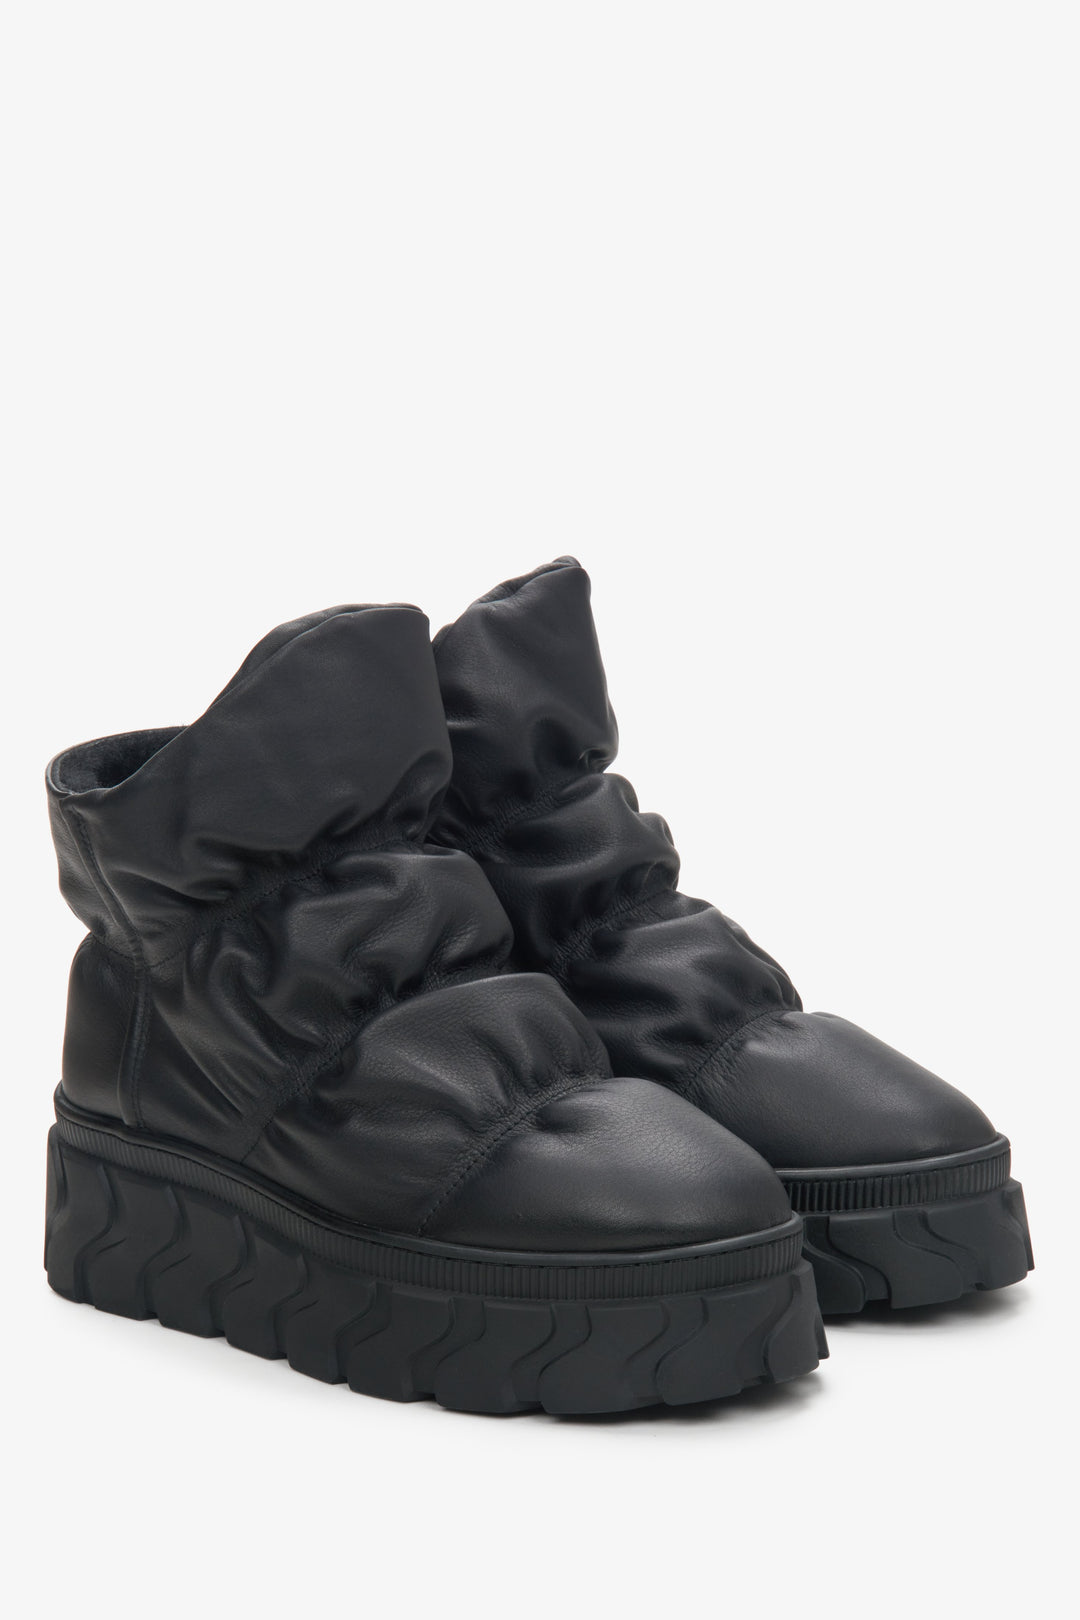 Women's snow boots in black.